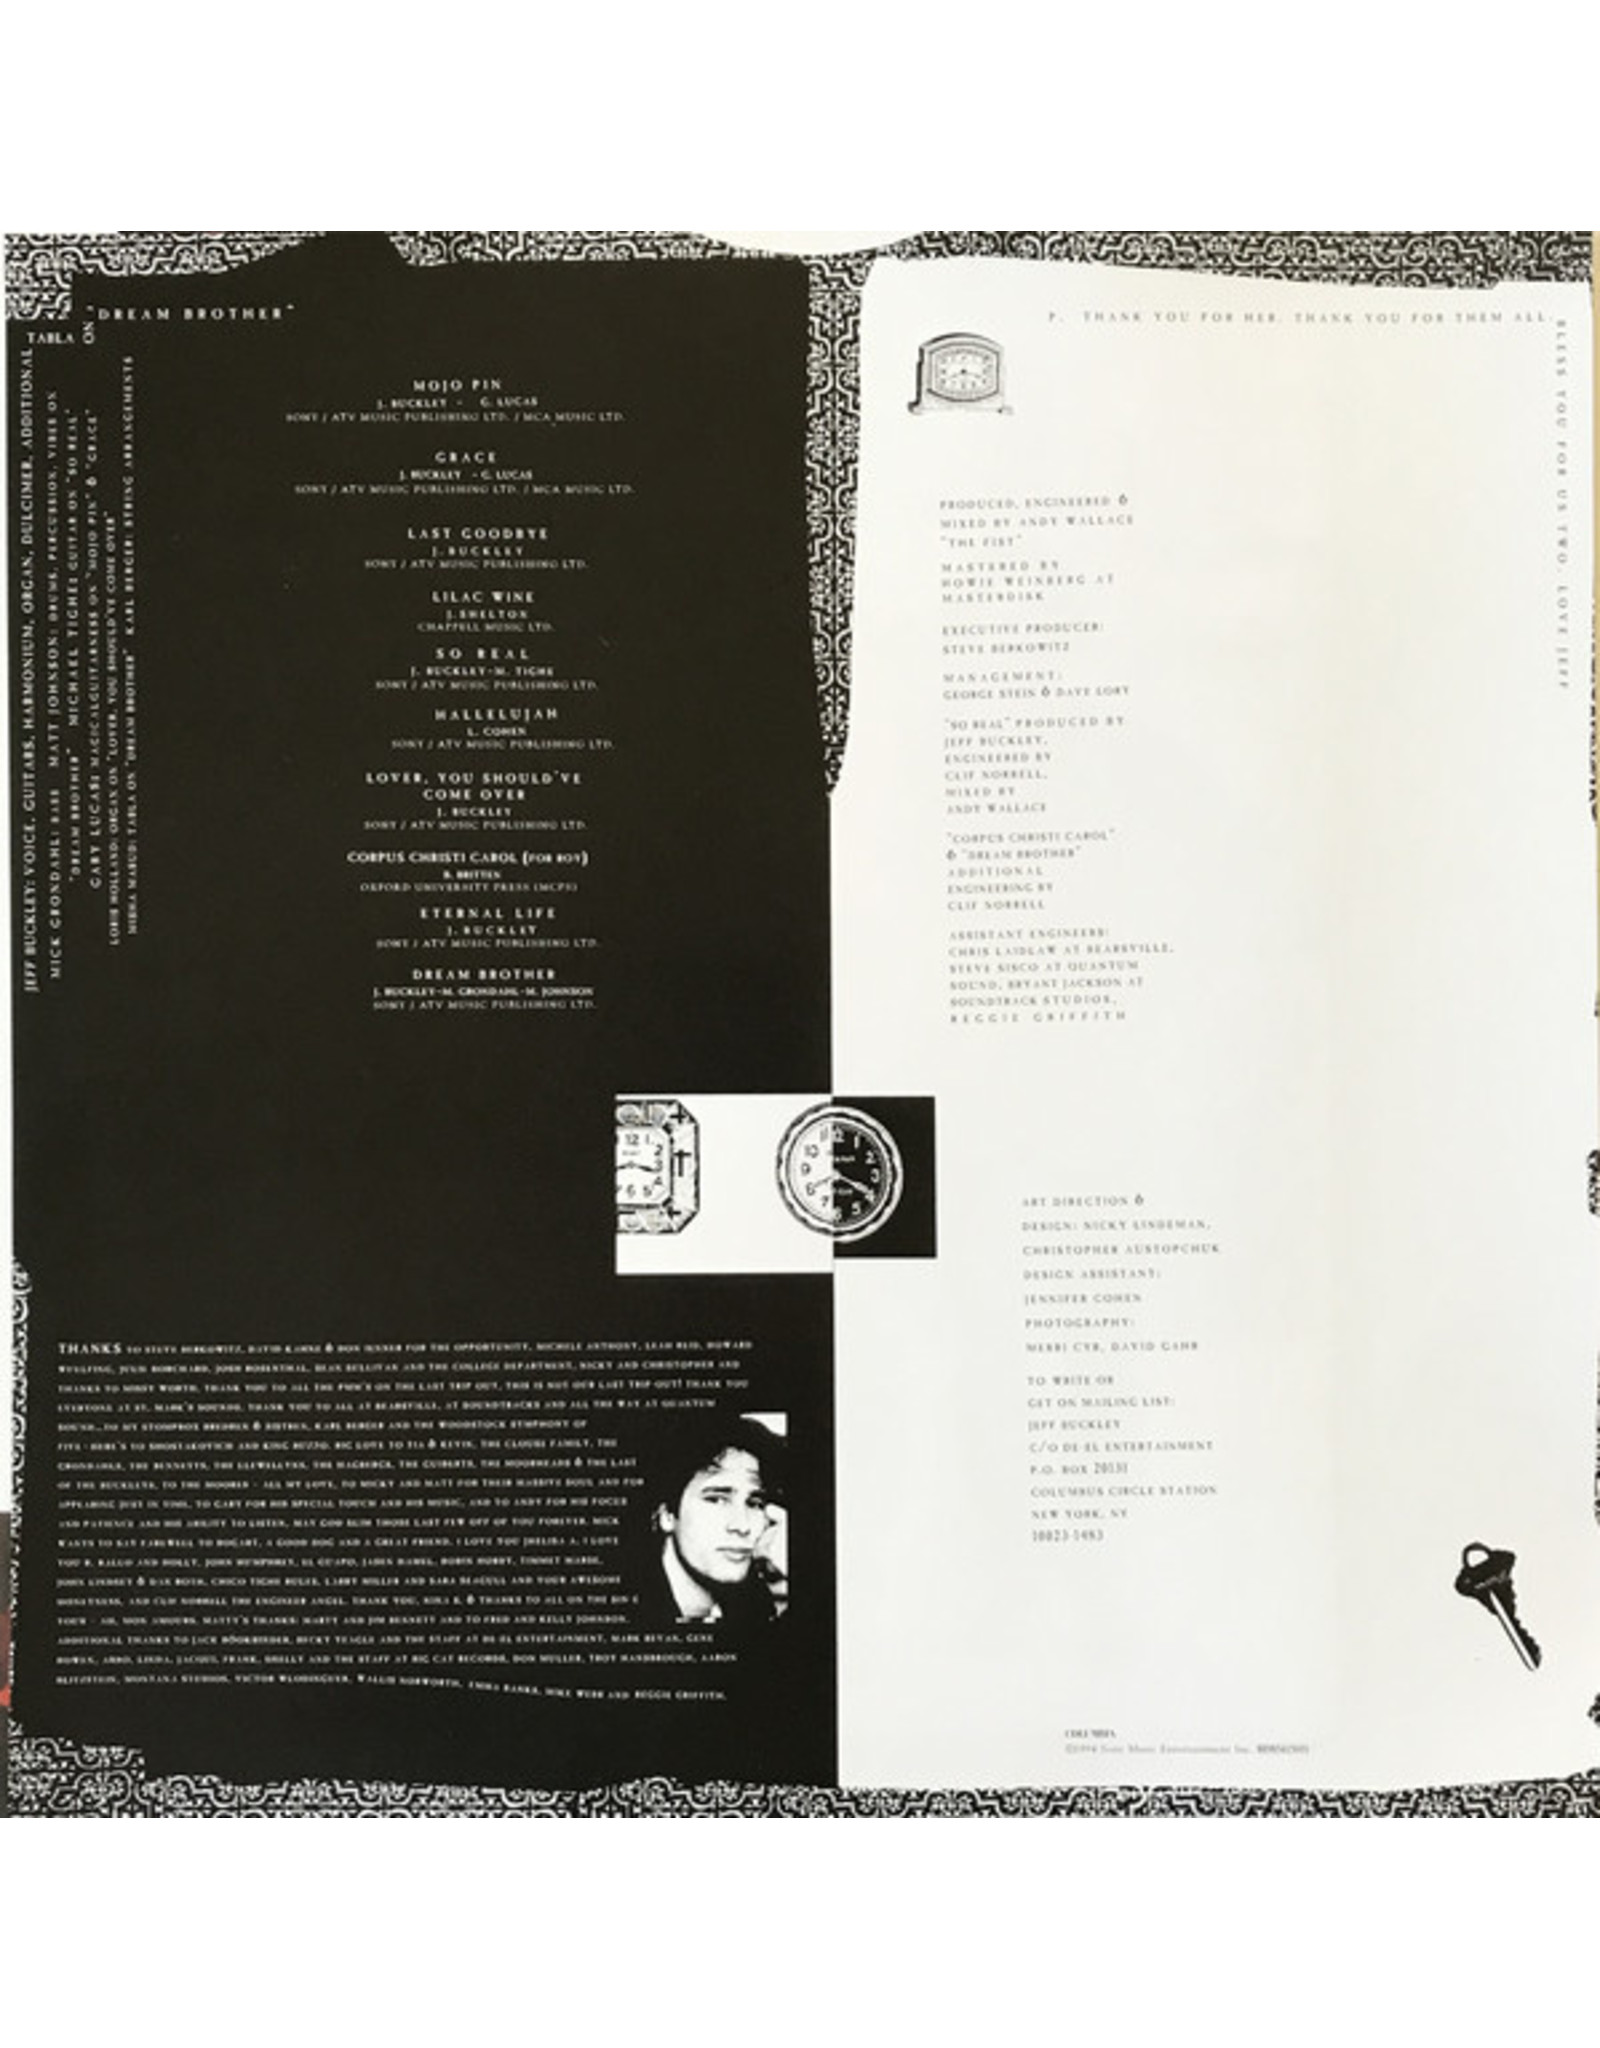 Jeff Buckley - Grace (25th Anniversary) [Gold Vinyl]